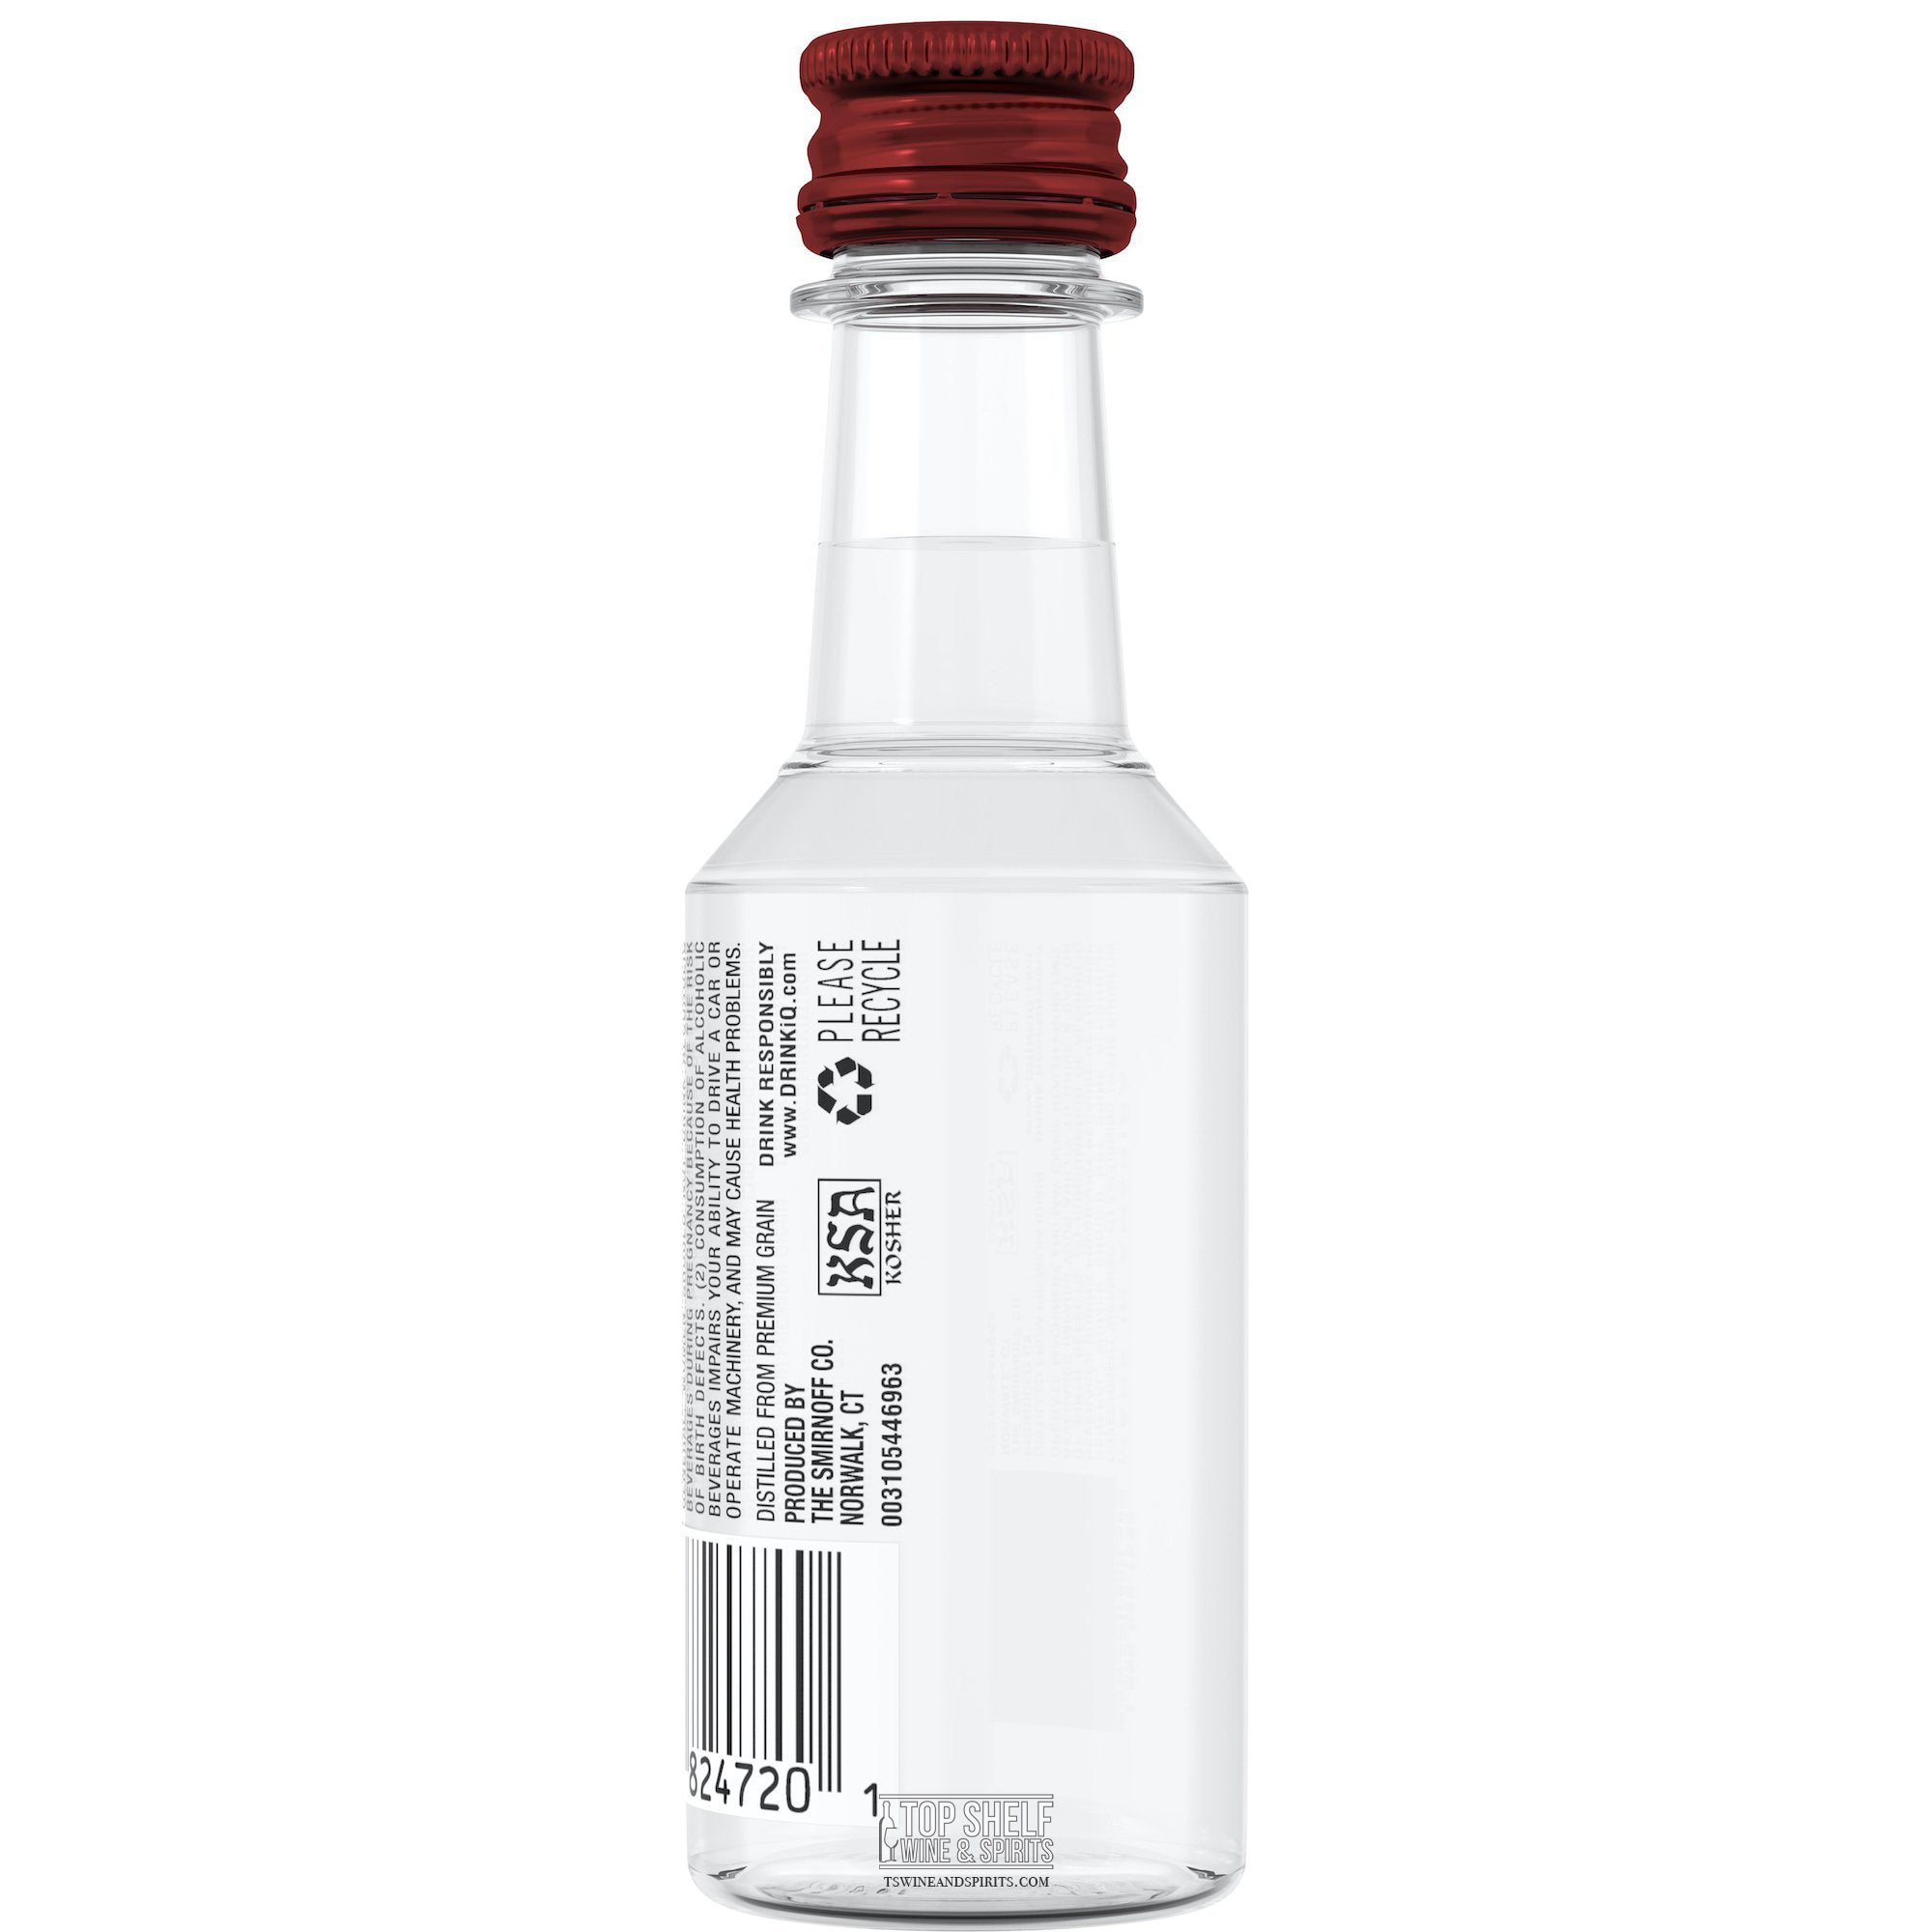 Smirnoff No. 21 Vodka 50ml Sleeve (10 bottles)